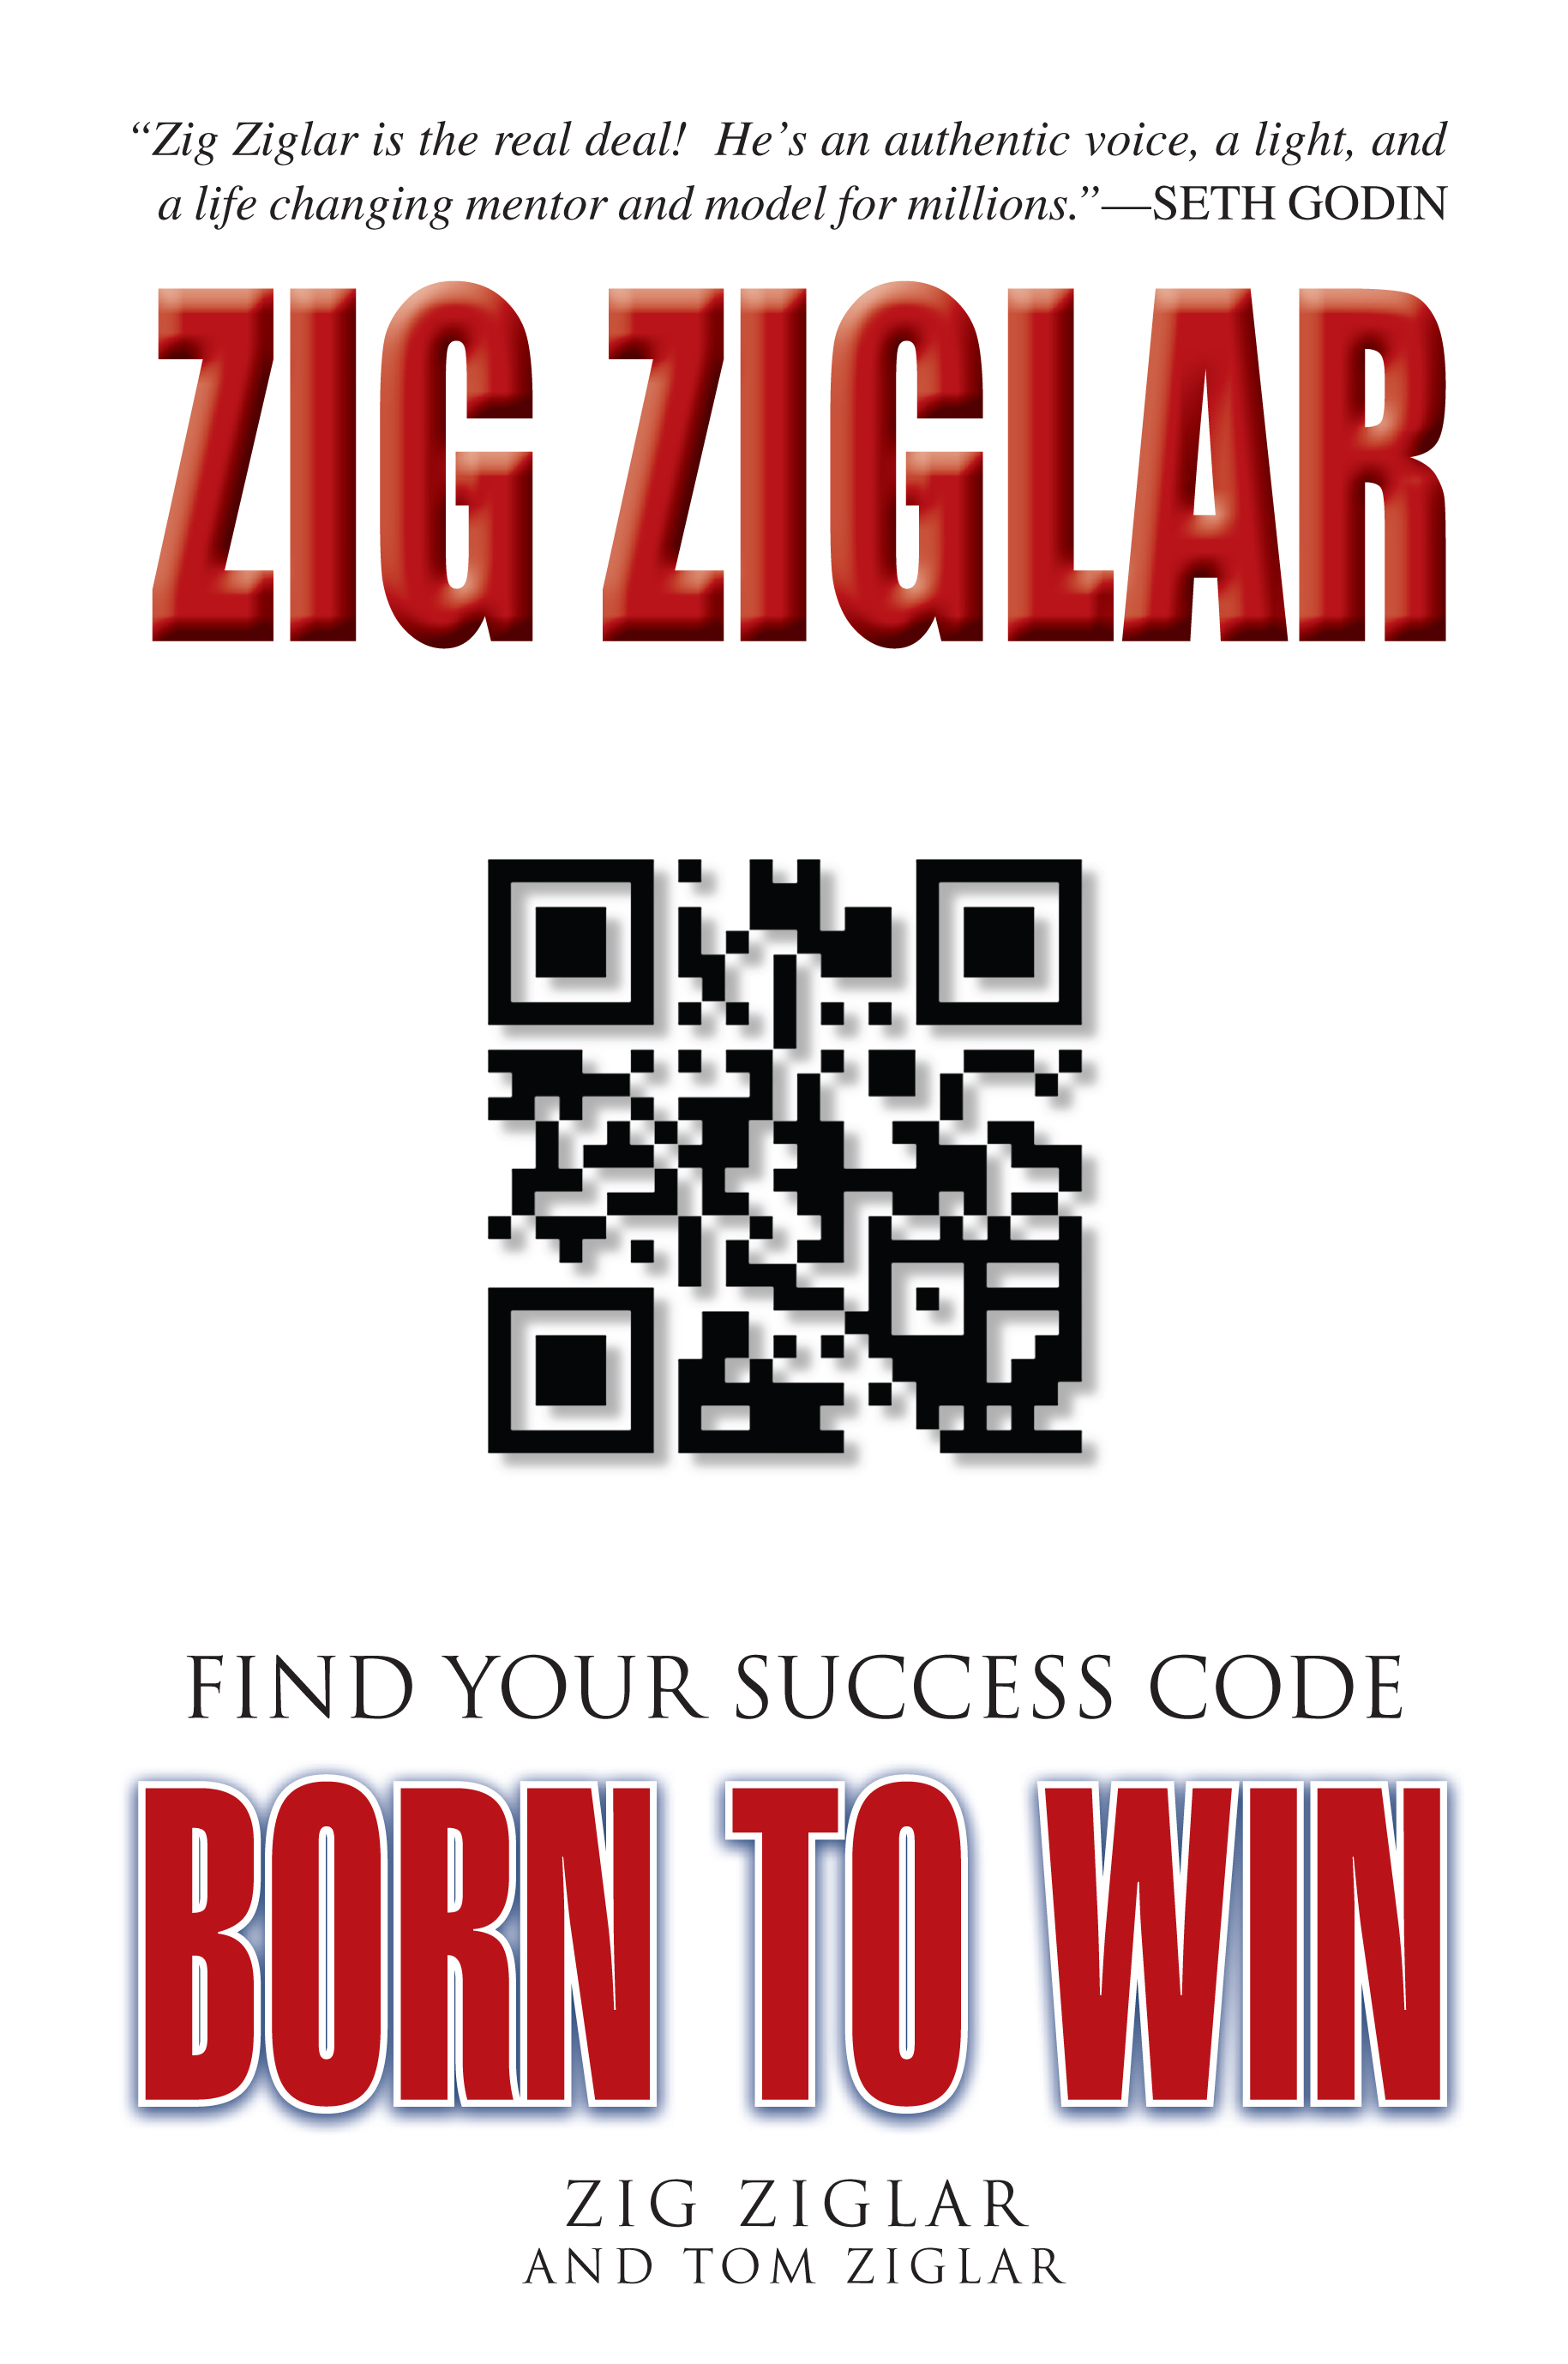 Born to Win with Tom and Zig Ziglar!